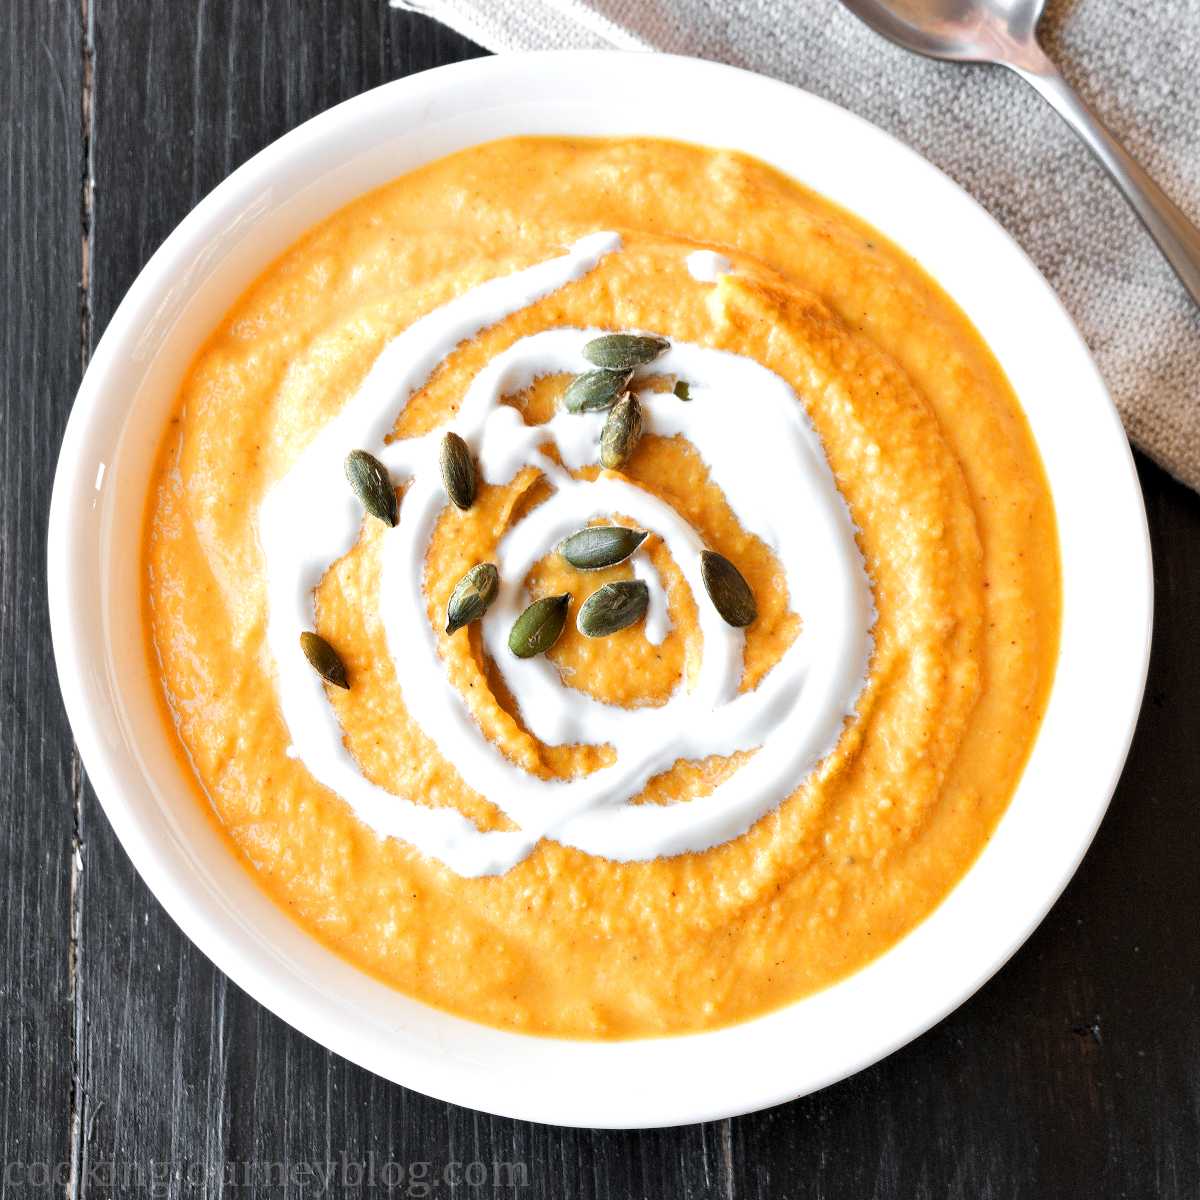 https://cookingjourneyblog.com/wp-content/uploads/2022/09/Pumpkin-curry-soup-6-%E2%80%93-Roasted-pumpkin-soup.jpg